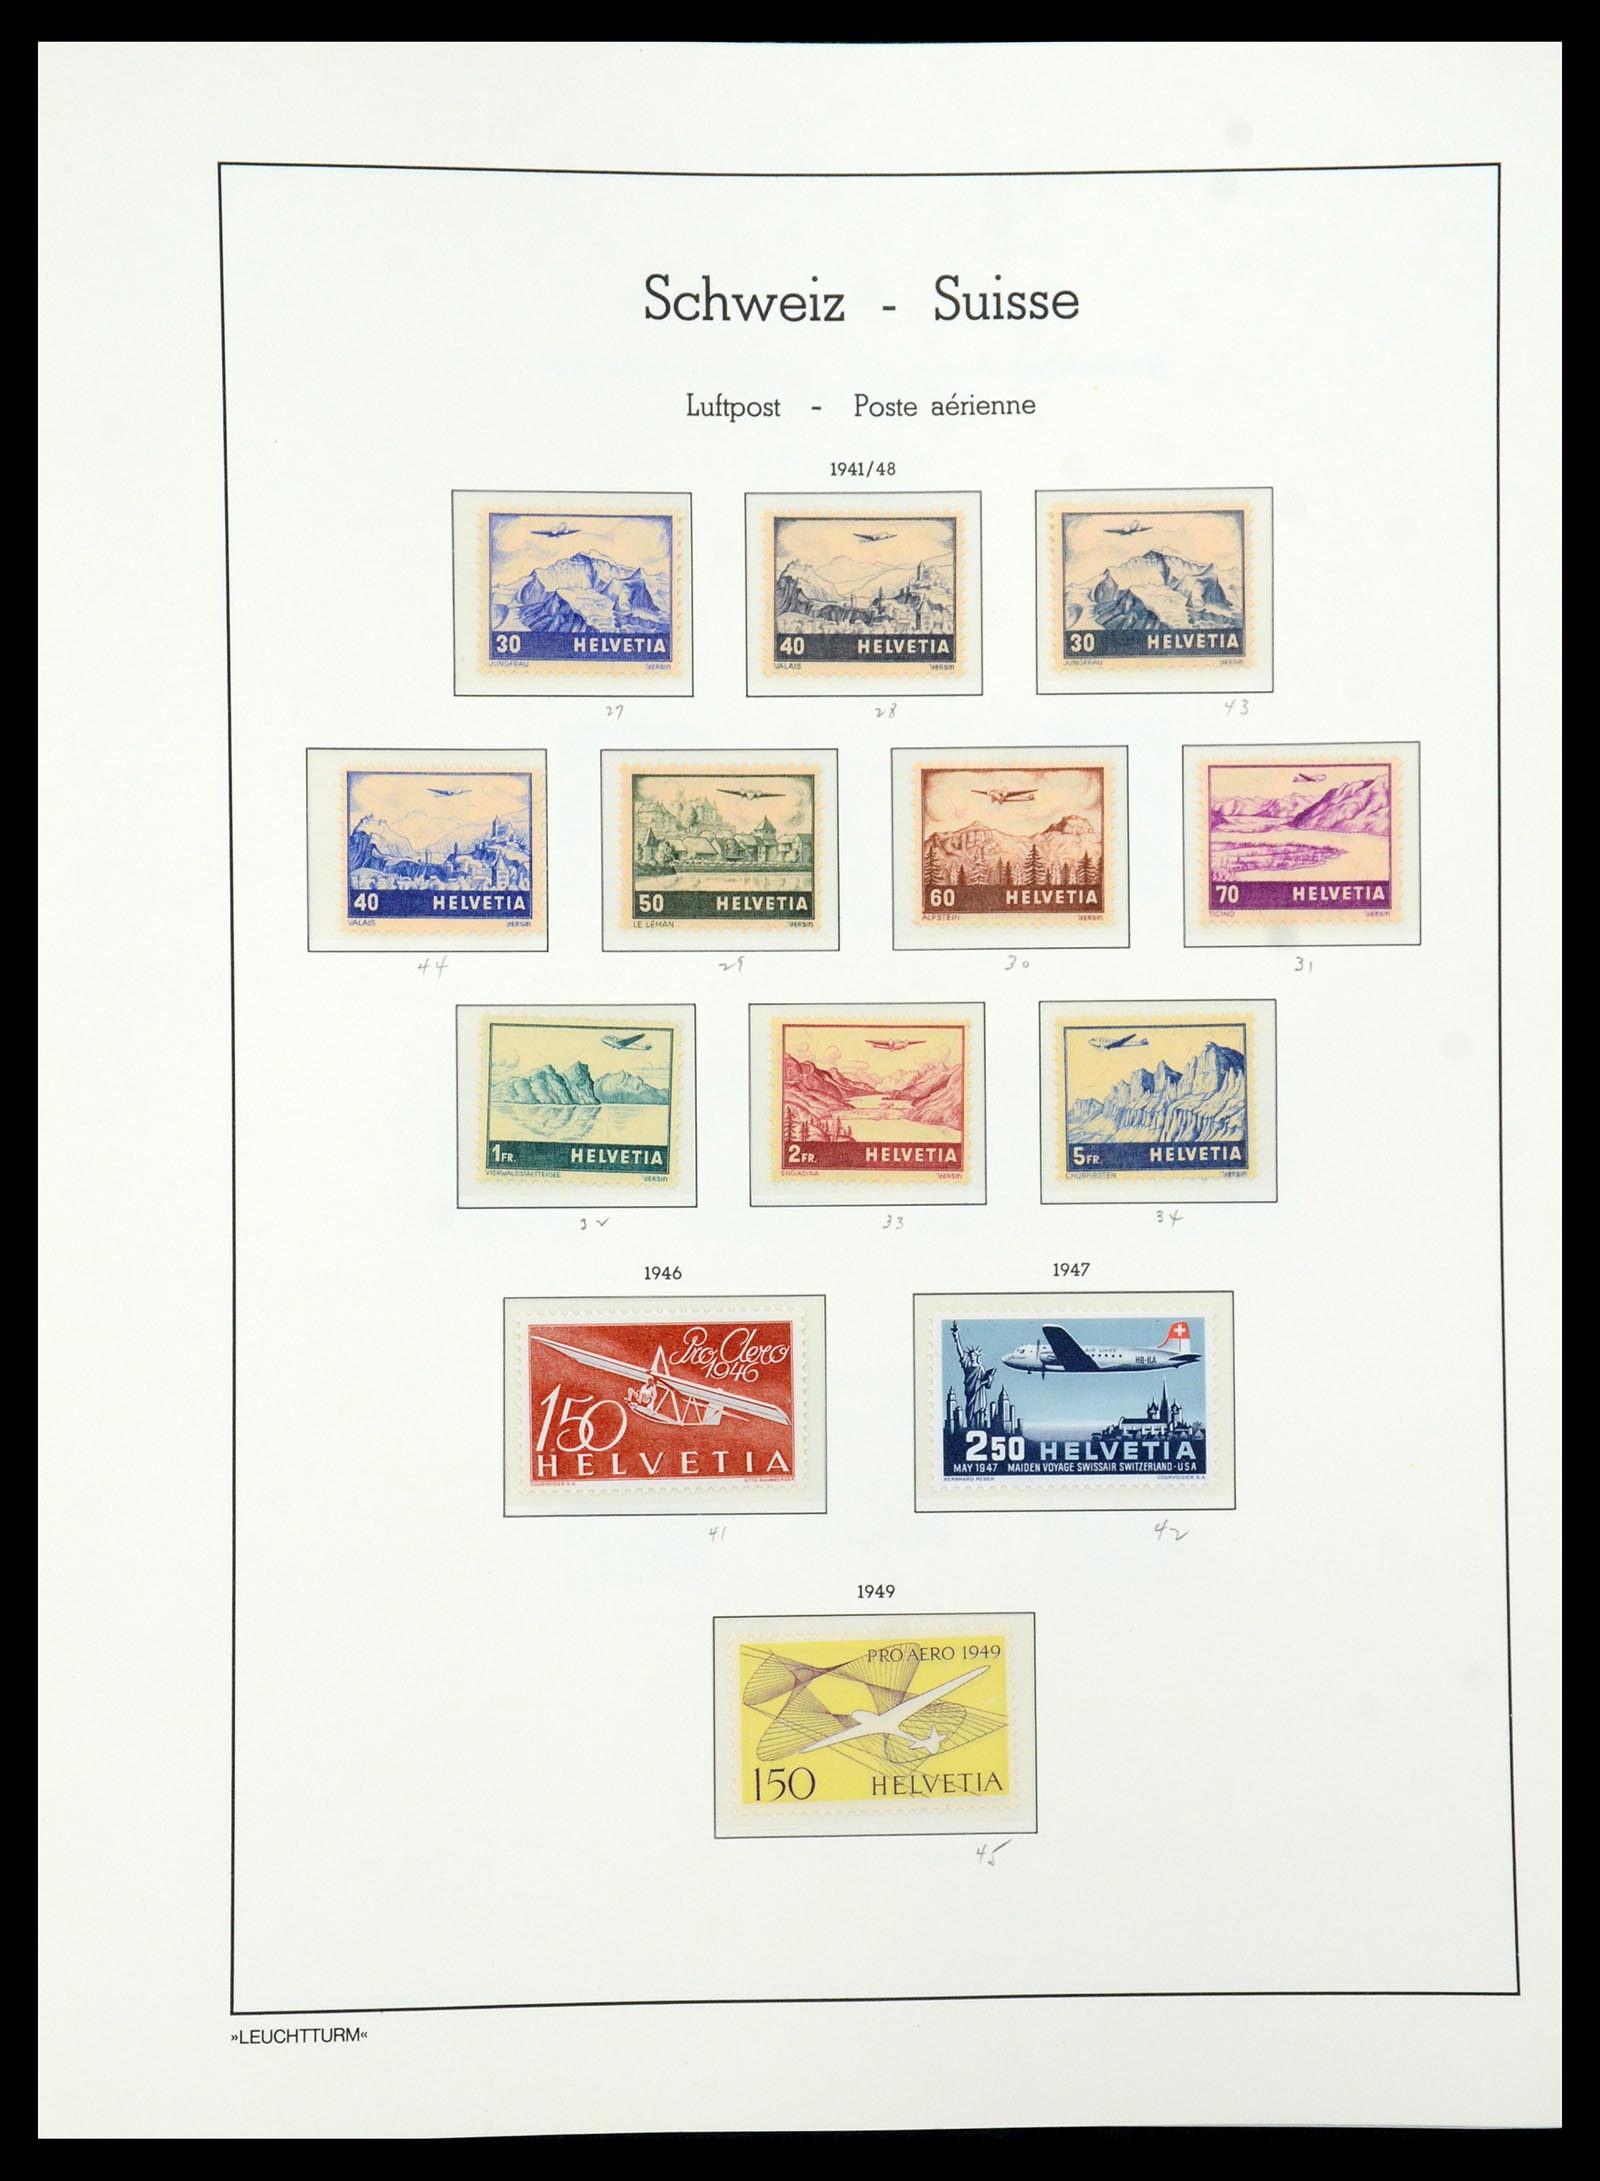 36284 058 - Stamp collection 36284 Switzerland 1854-2006.